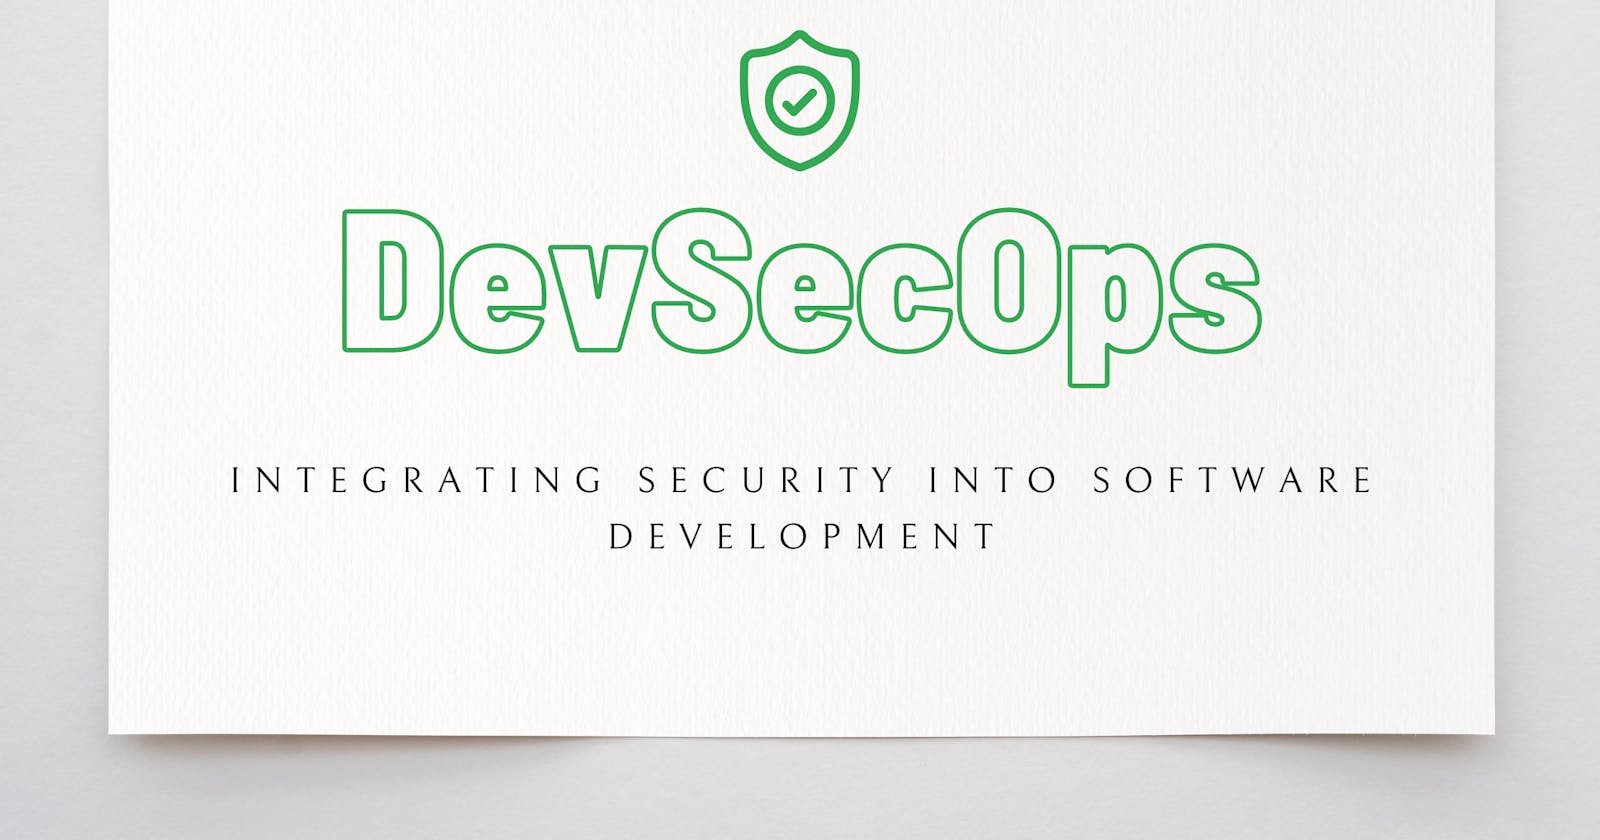 DevSecOps: Integrating Security into Software Development